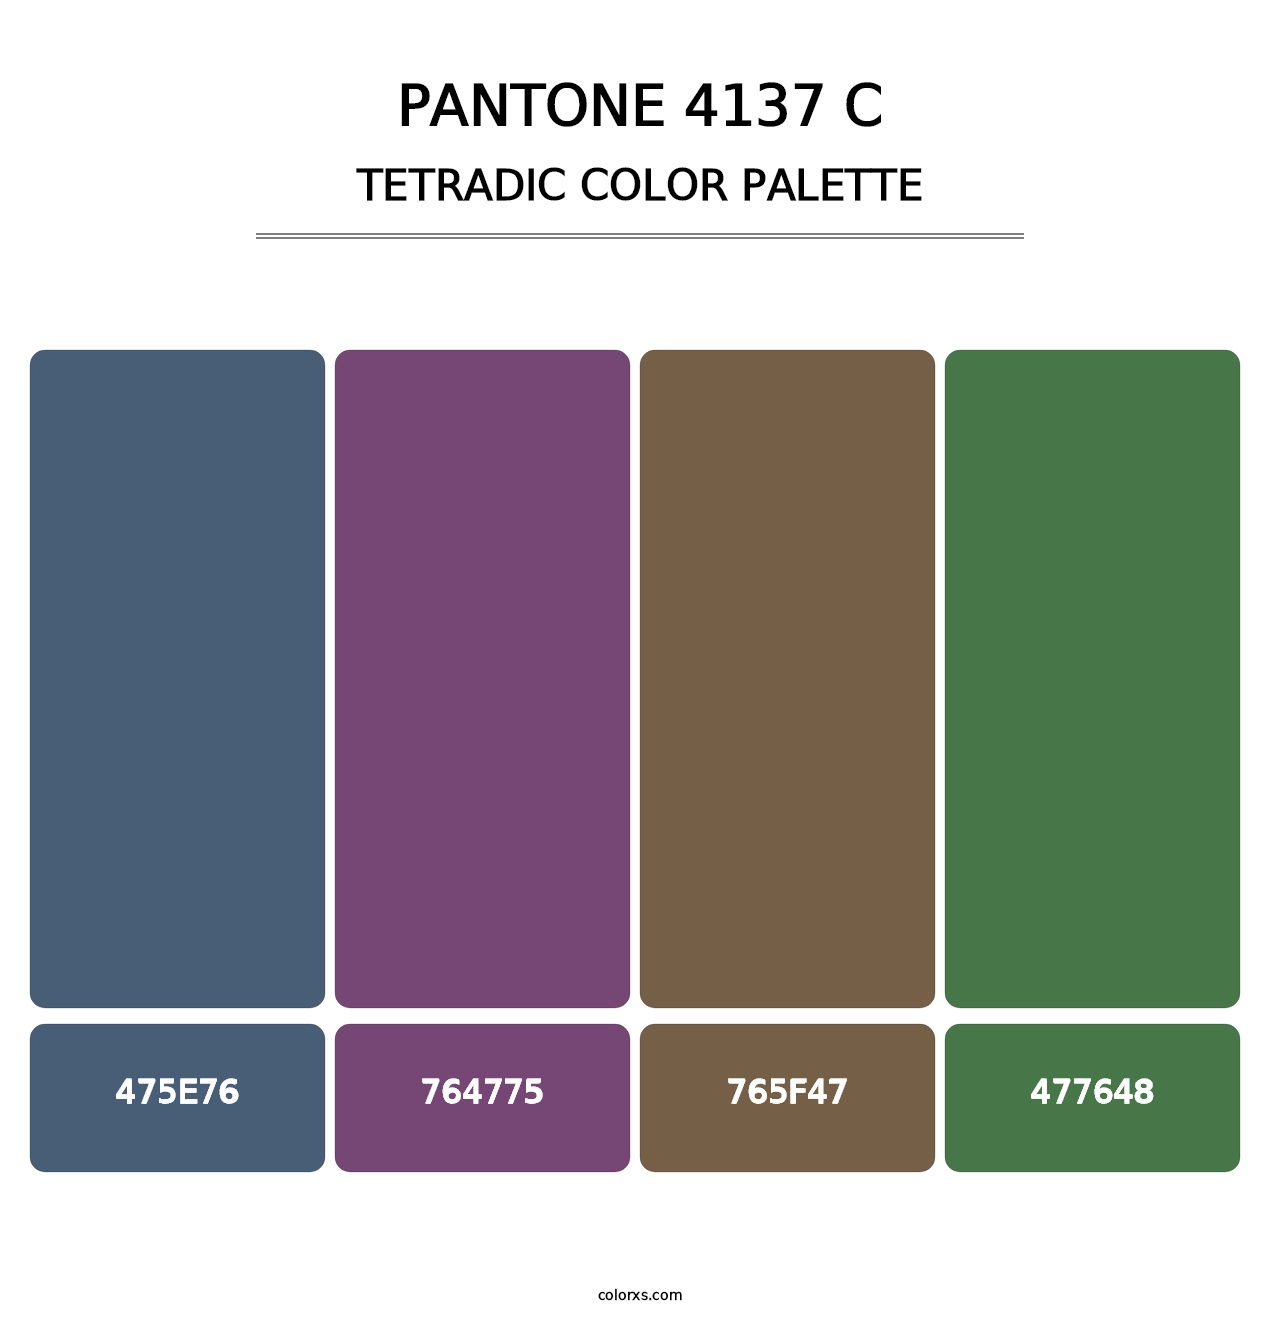 PANTONE 4137 C - Tetradic Color Palette